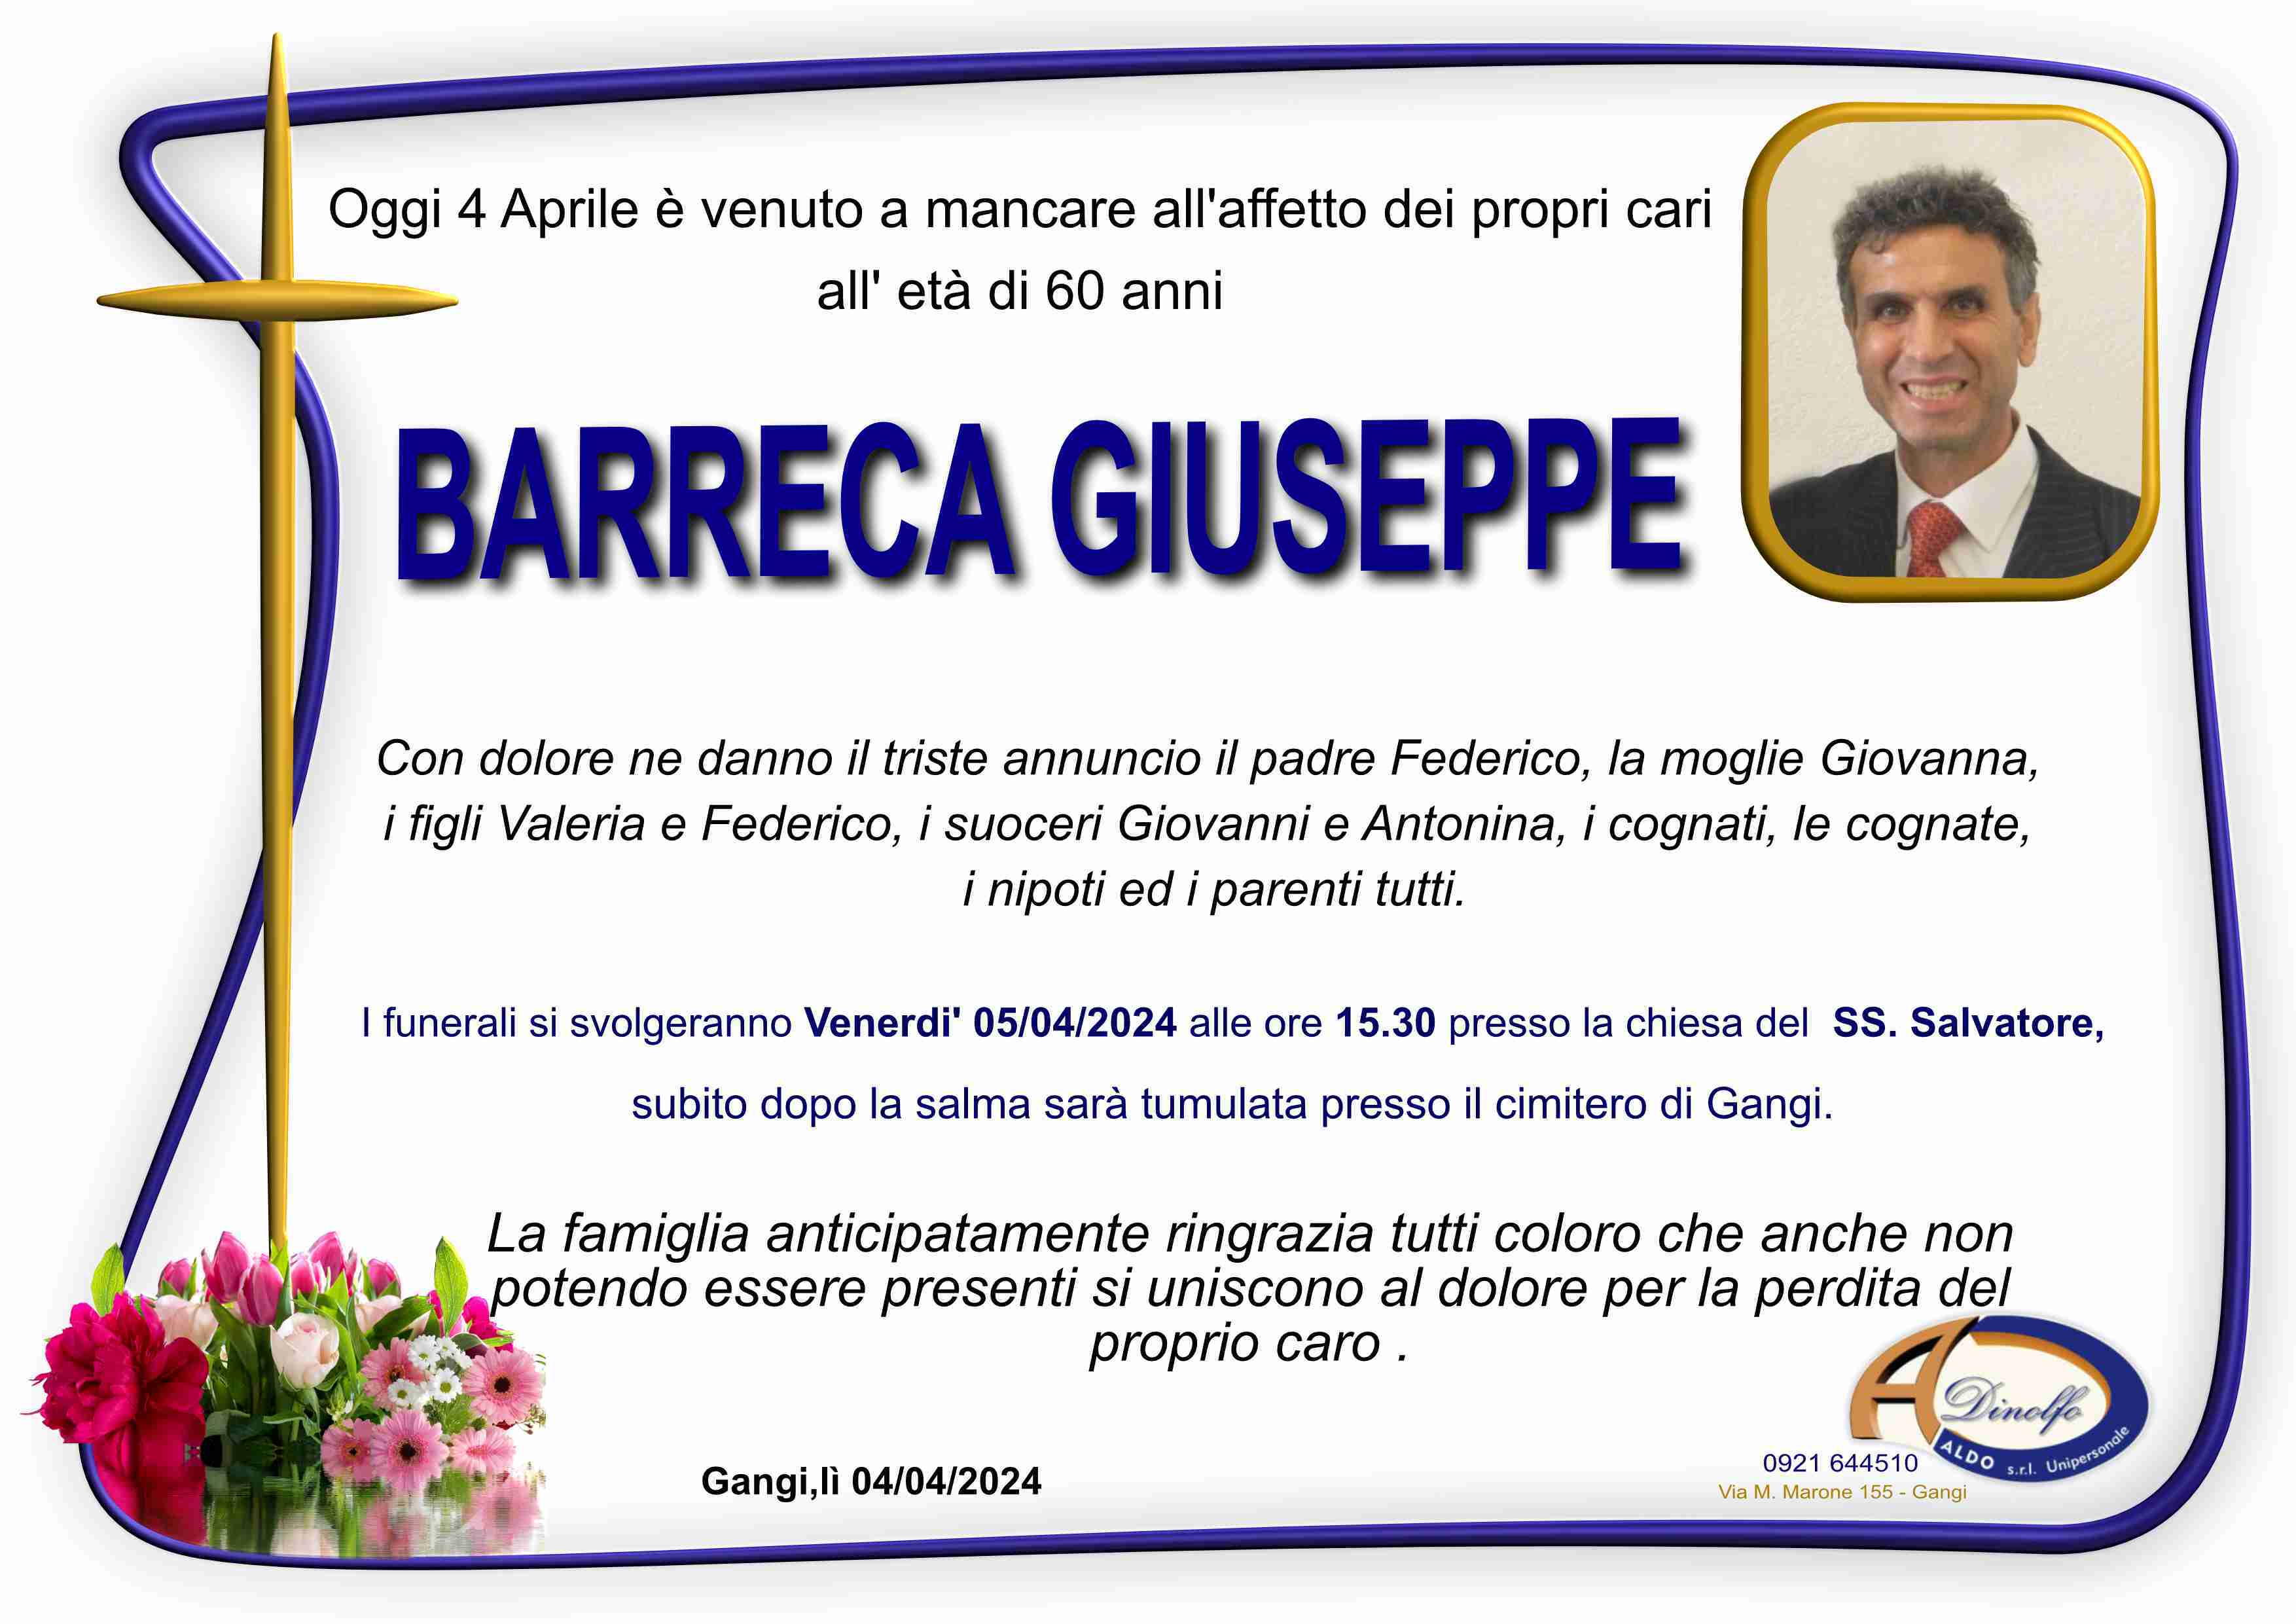 Giuseppe Barreca